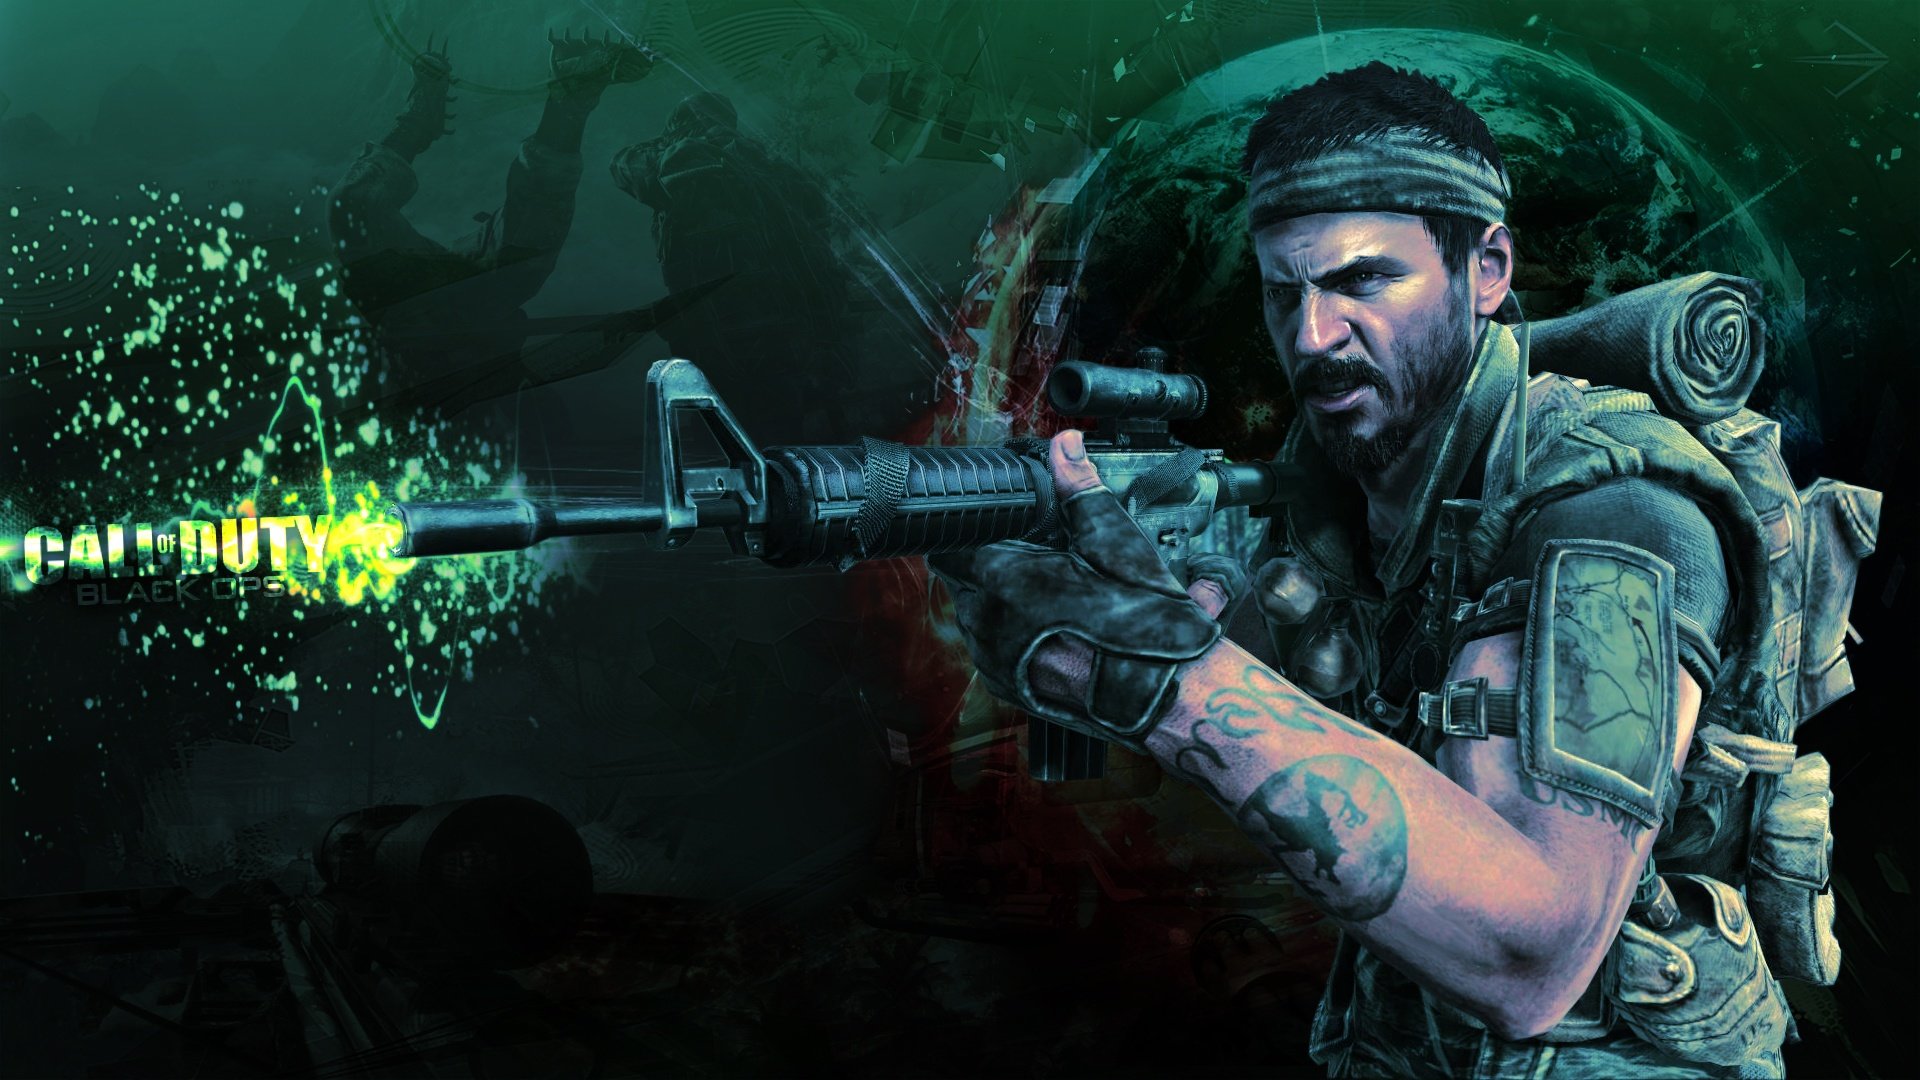 Best Call Of Duty: Black Ops wallpaper ID:70176 for High Resolution 1080p desktop